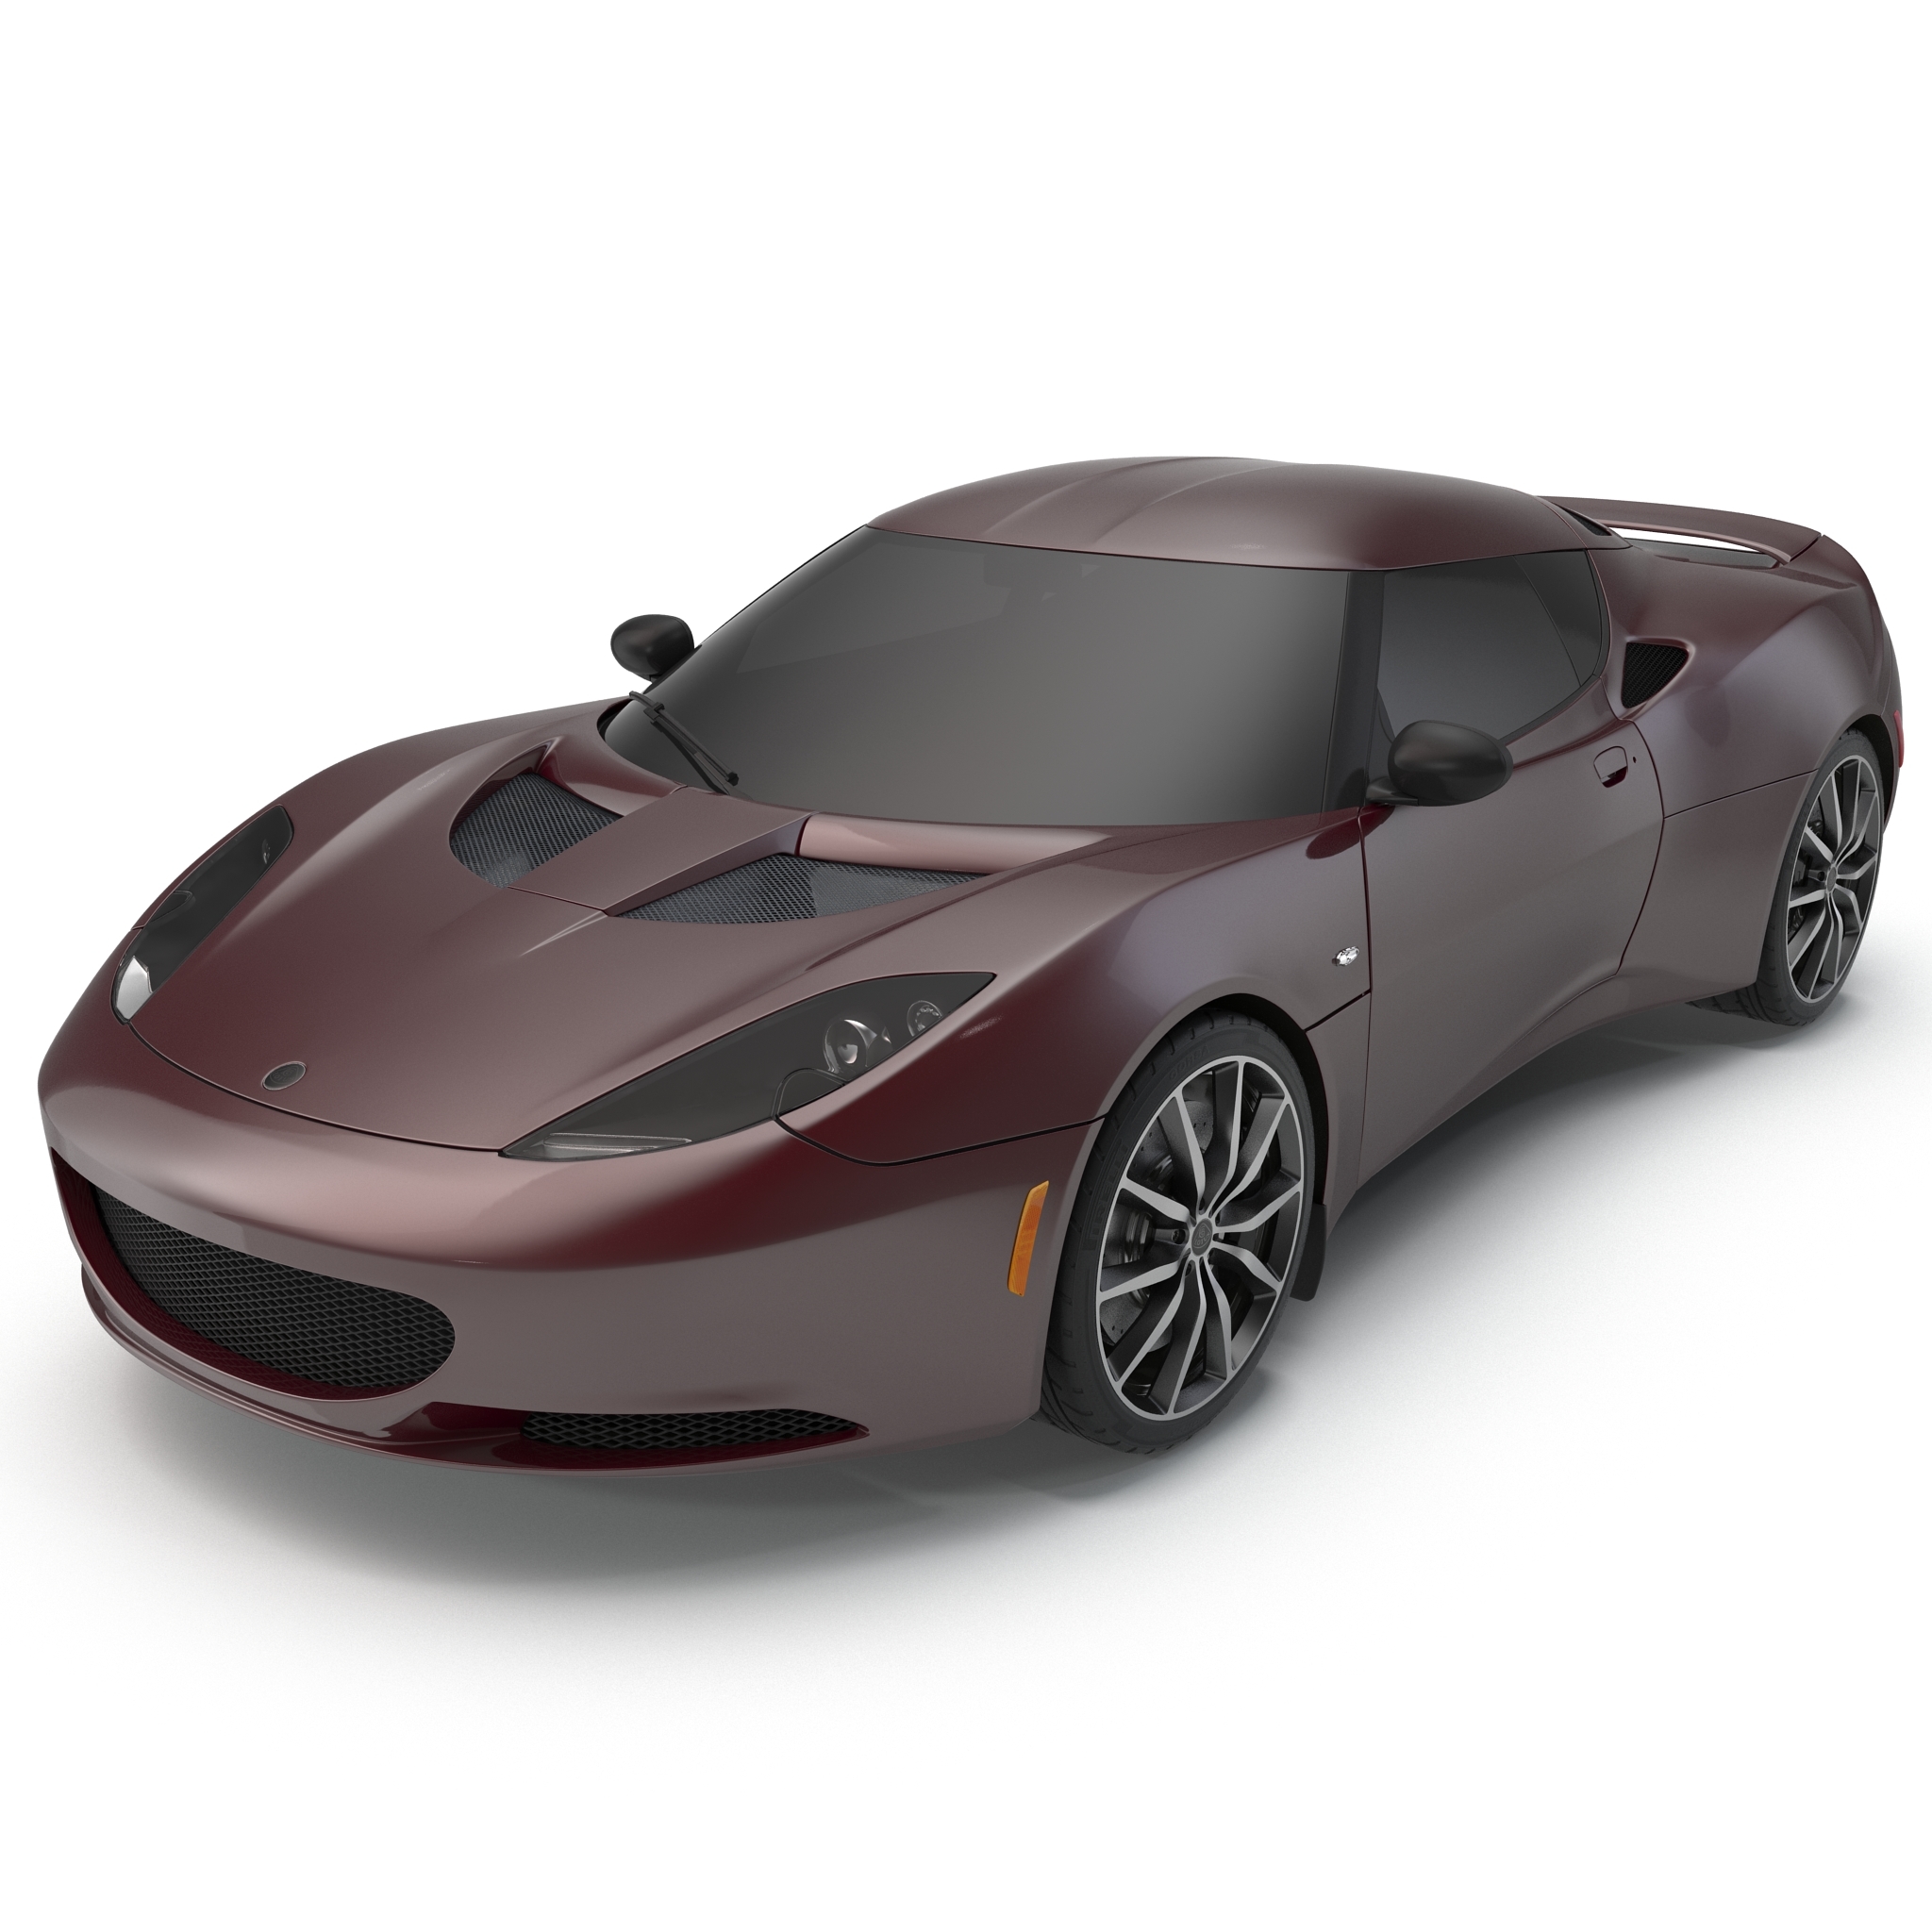 Lotus Evora Ips 2014 Sport Car Without Interior